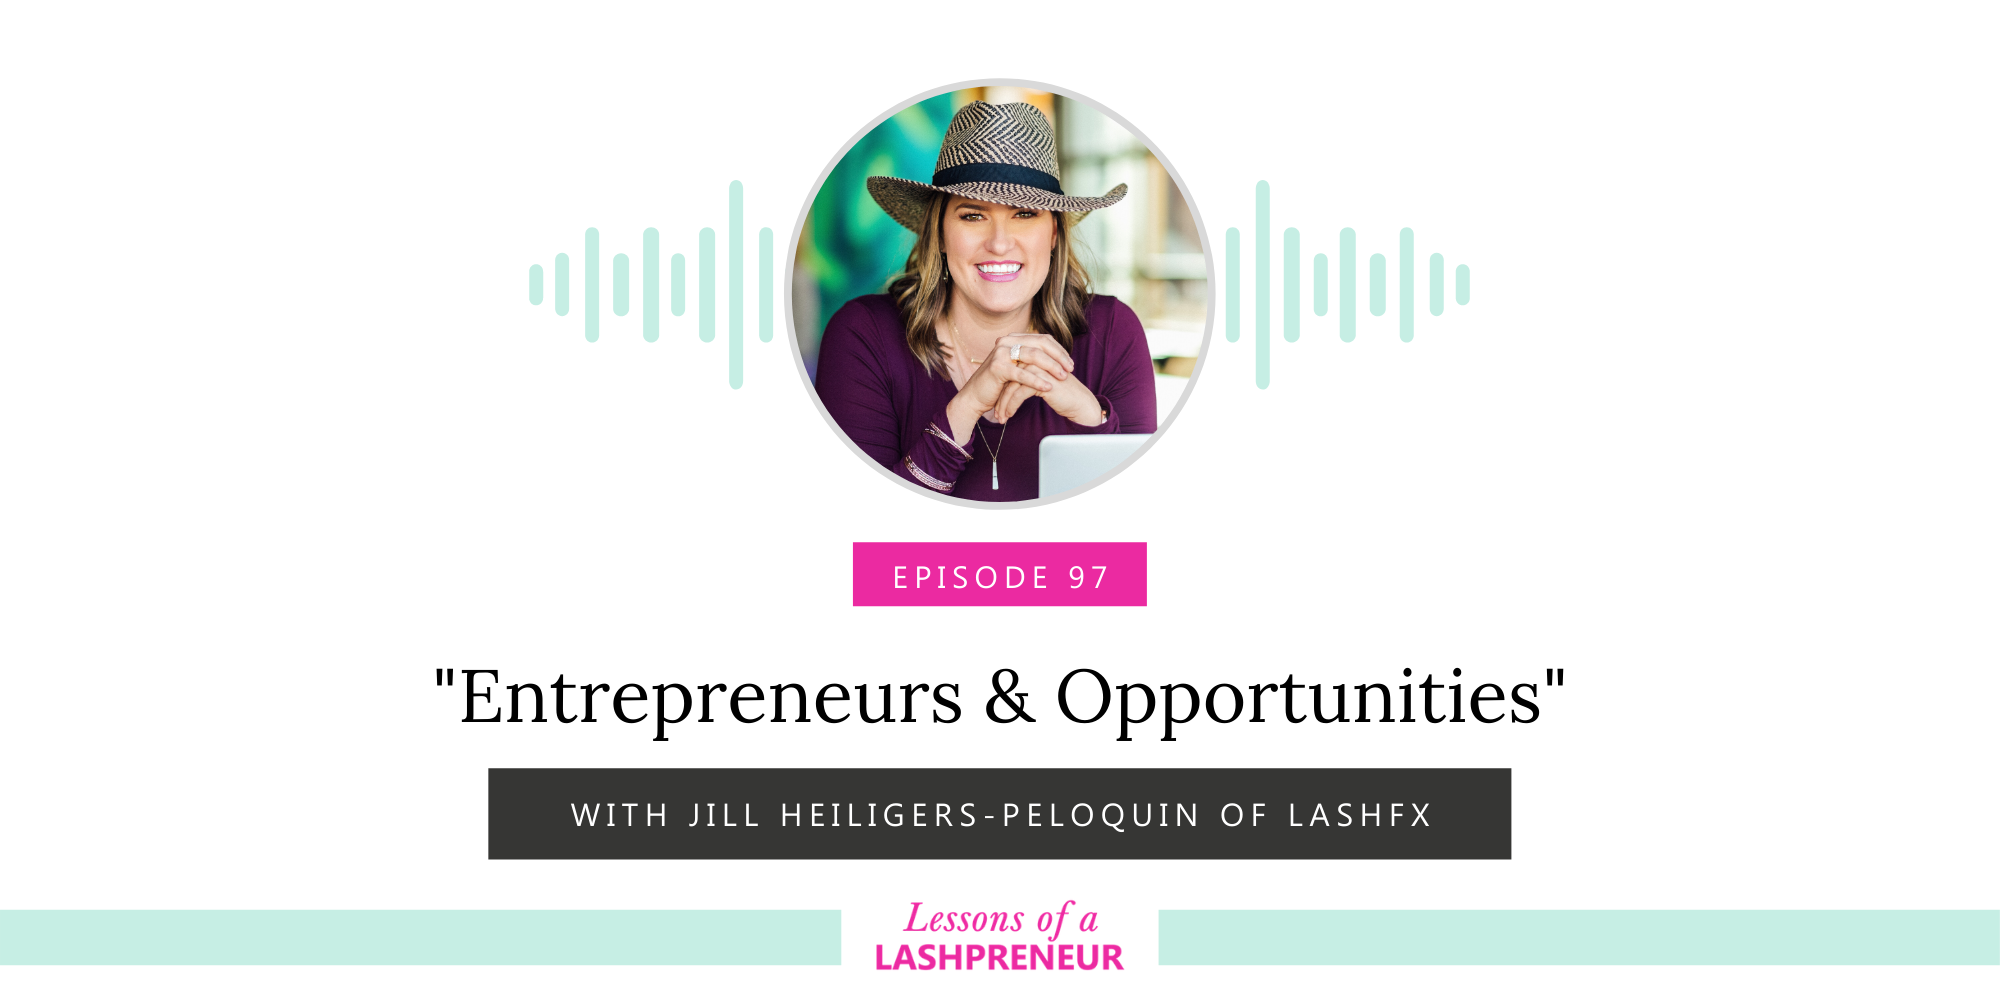 Entrepreneurs & Opportunities with Jill Heiligers-Peloquin of LashFX